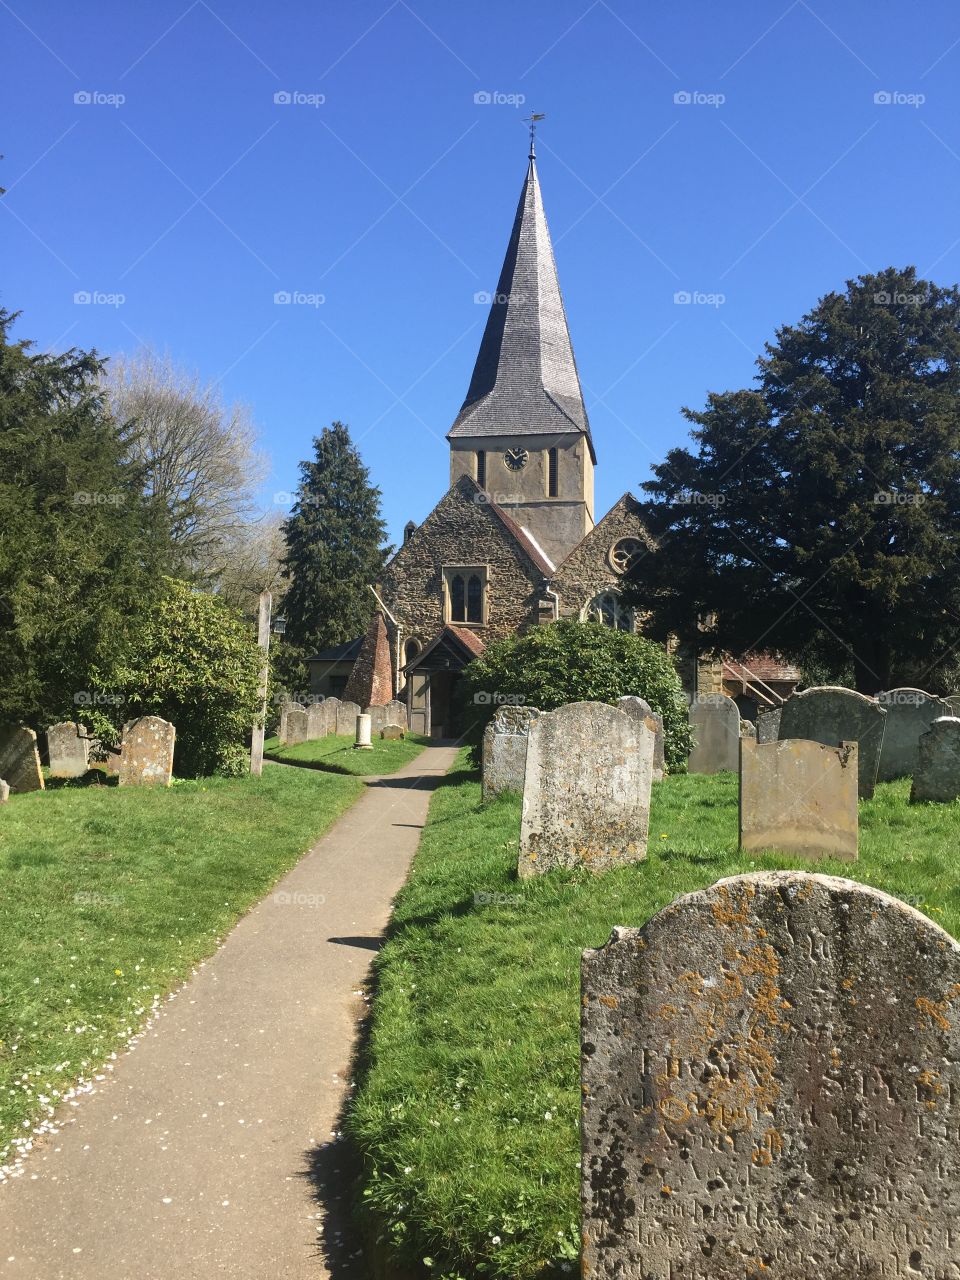 Quintessential church in Surrey, England